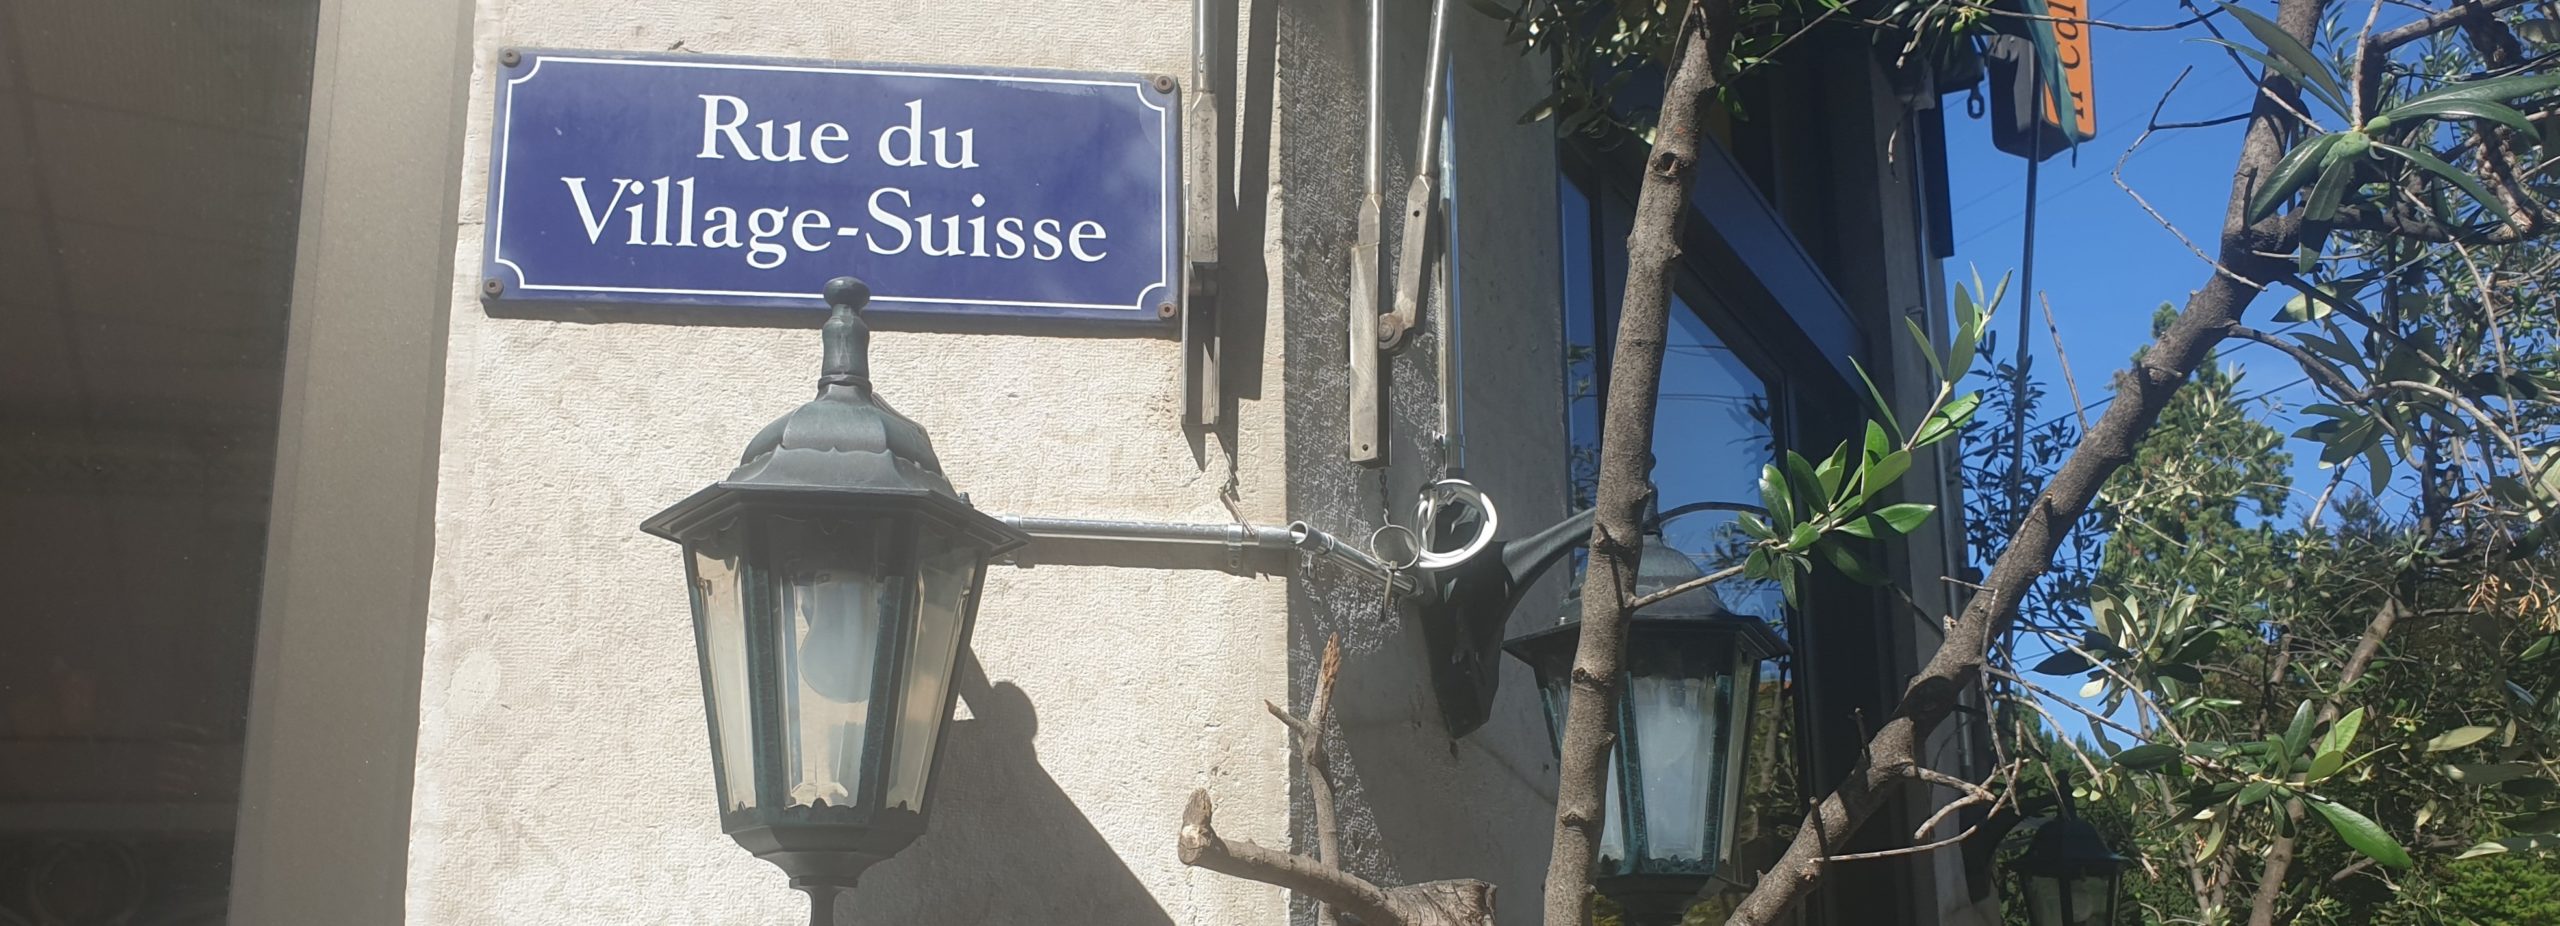 rue du Village Suisse